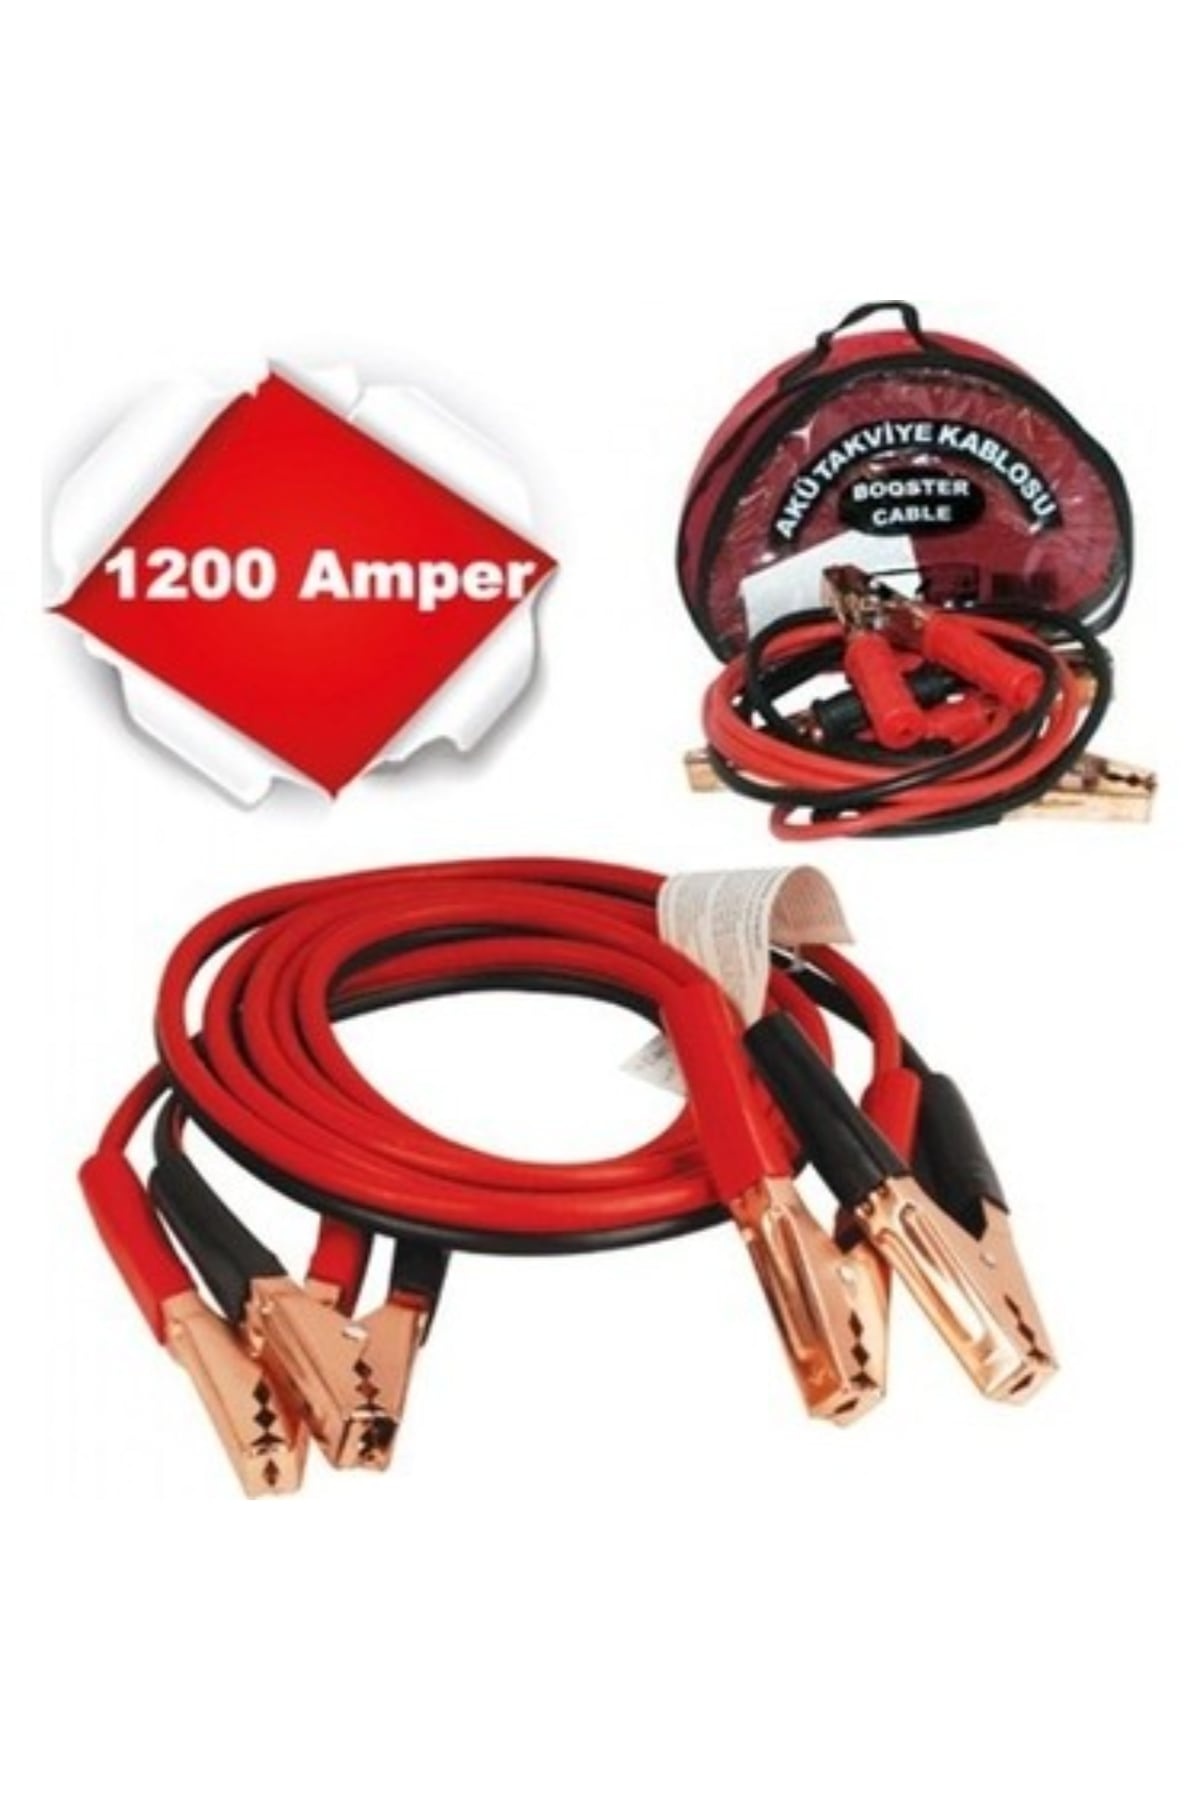 Akü Takviye Kablosu 1200 Amper*30 - 10-0007 - 2345